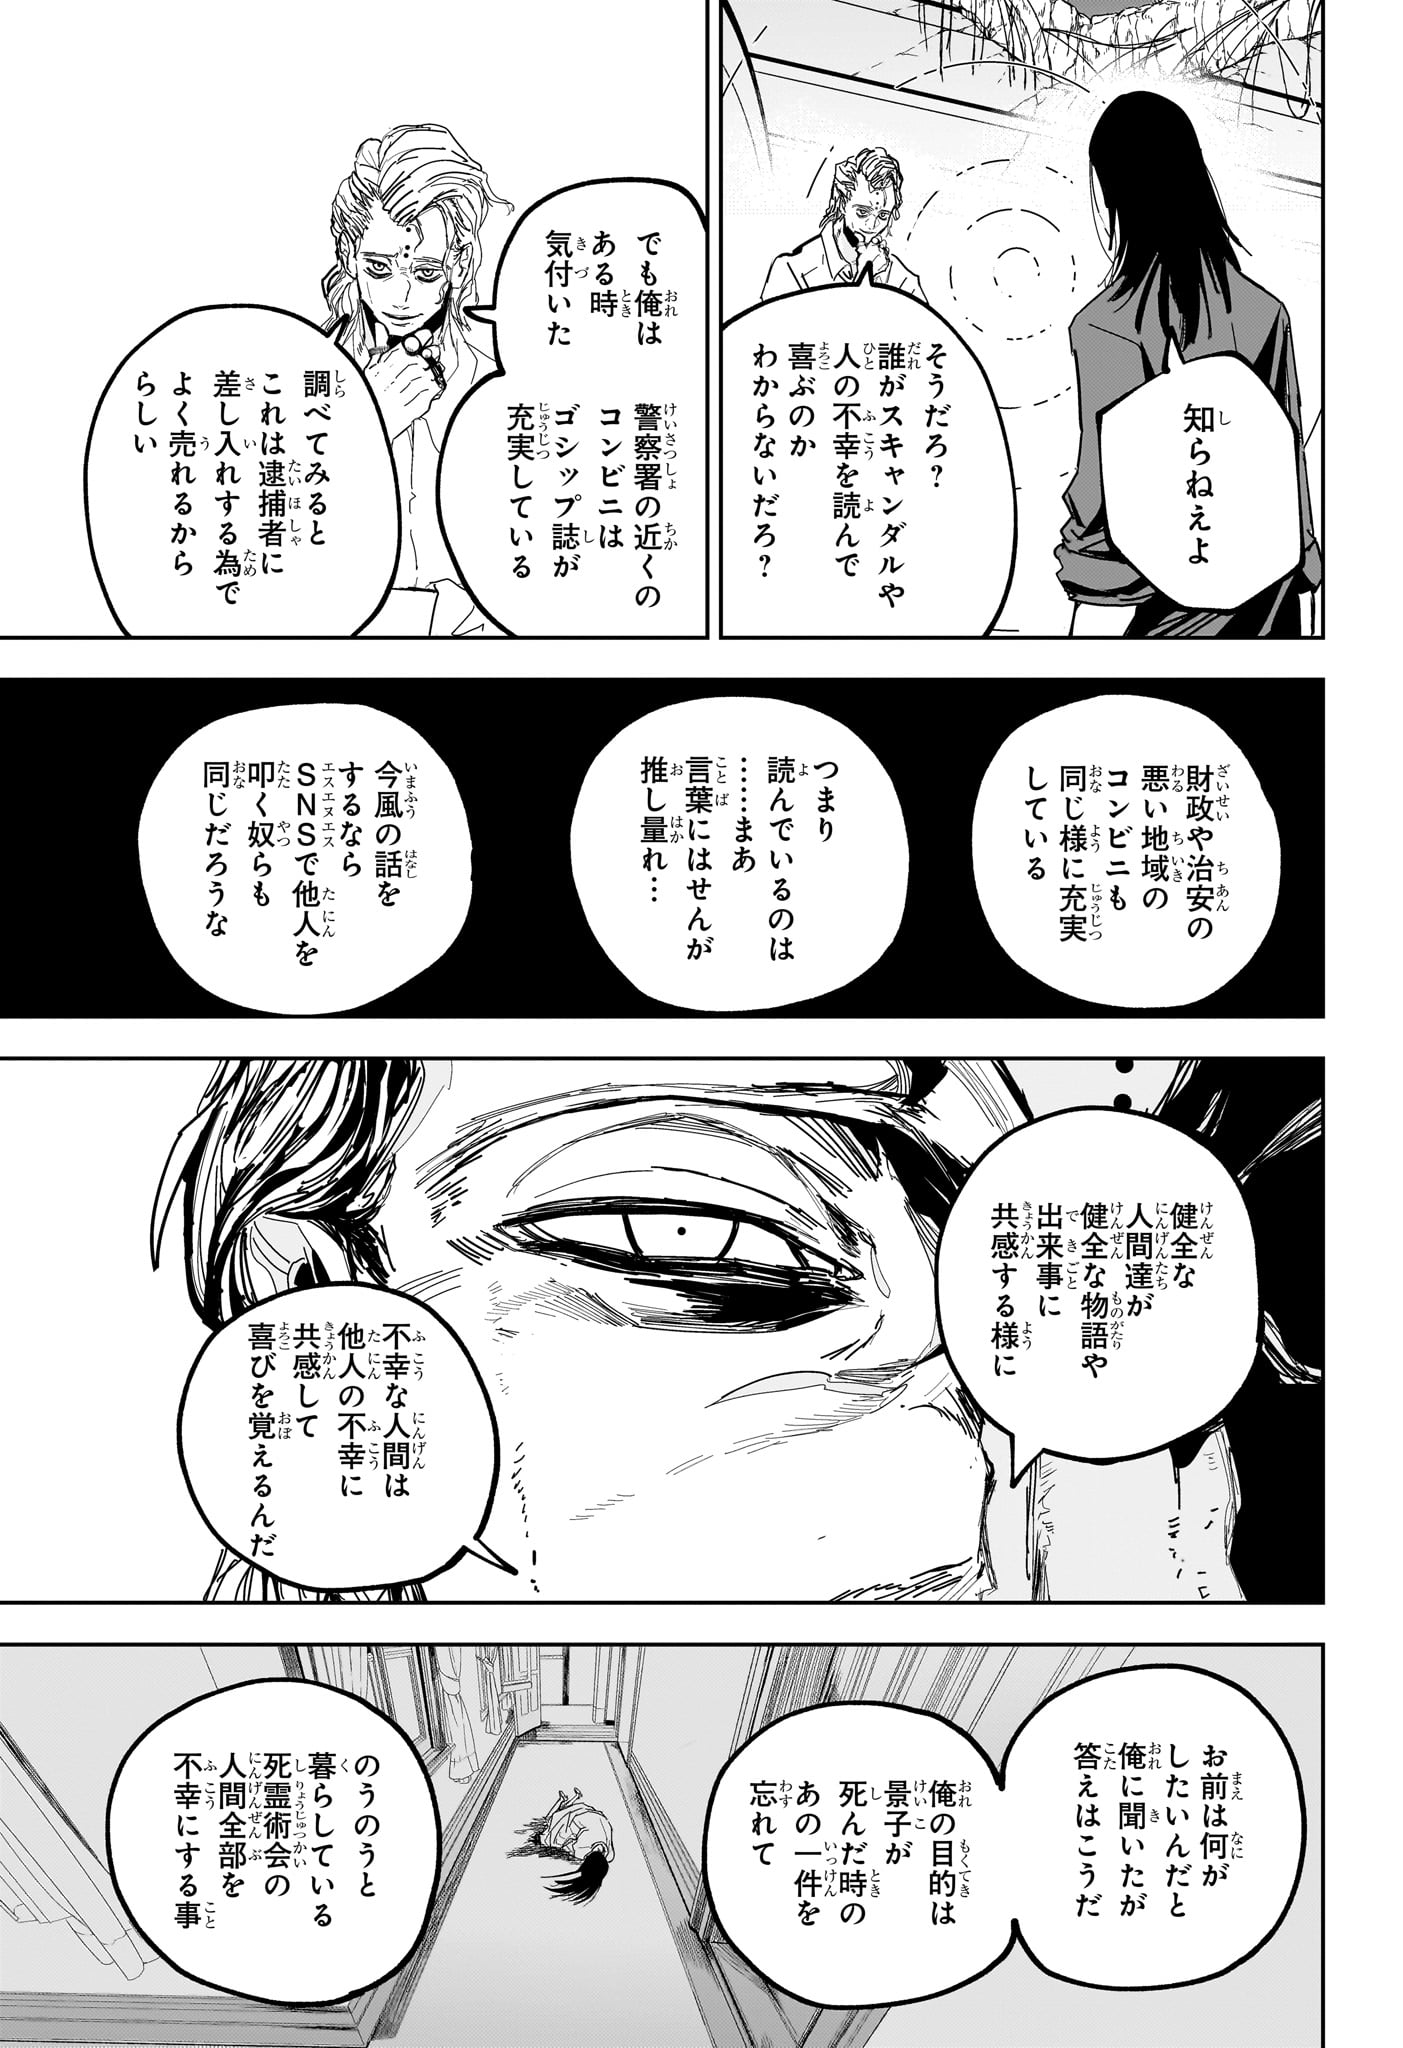 Kyokuto Necromance - Chapter 13 - Page 17